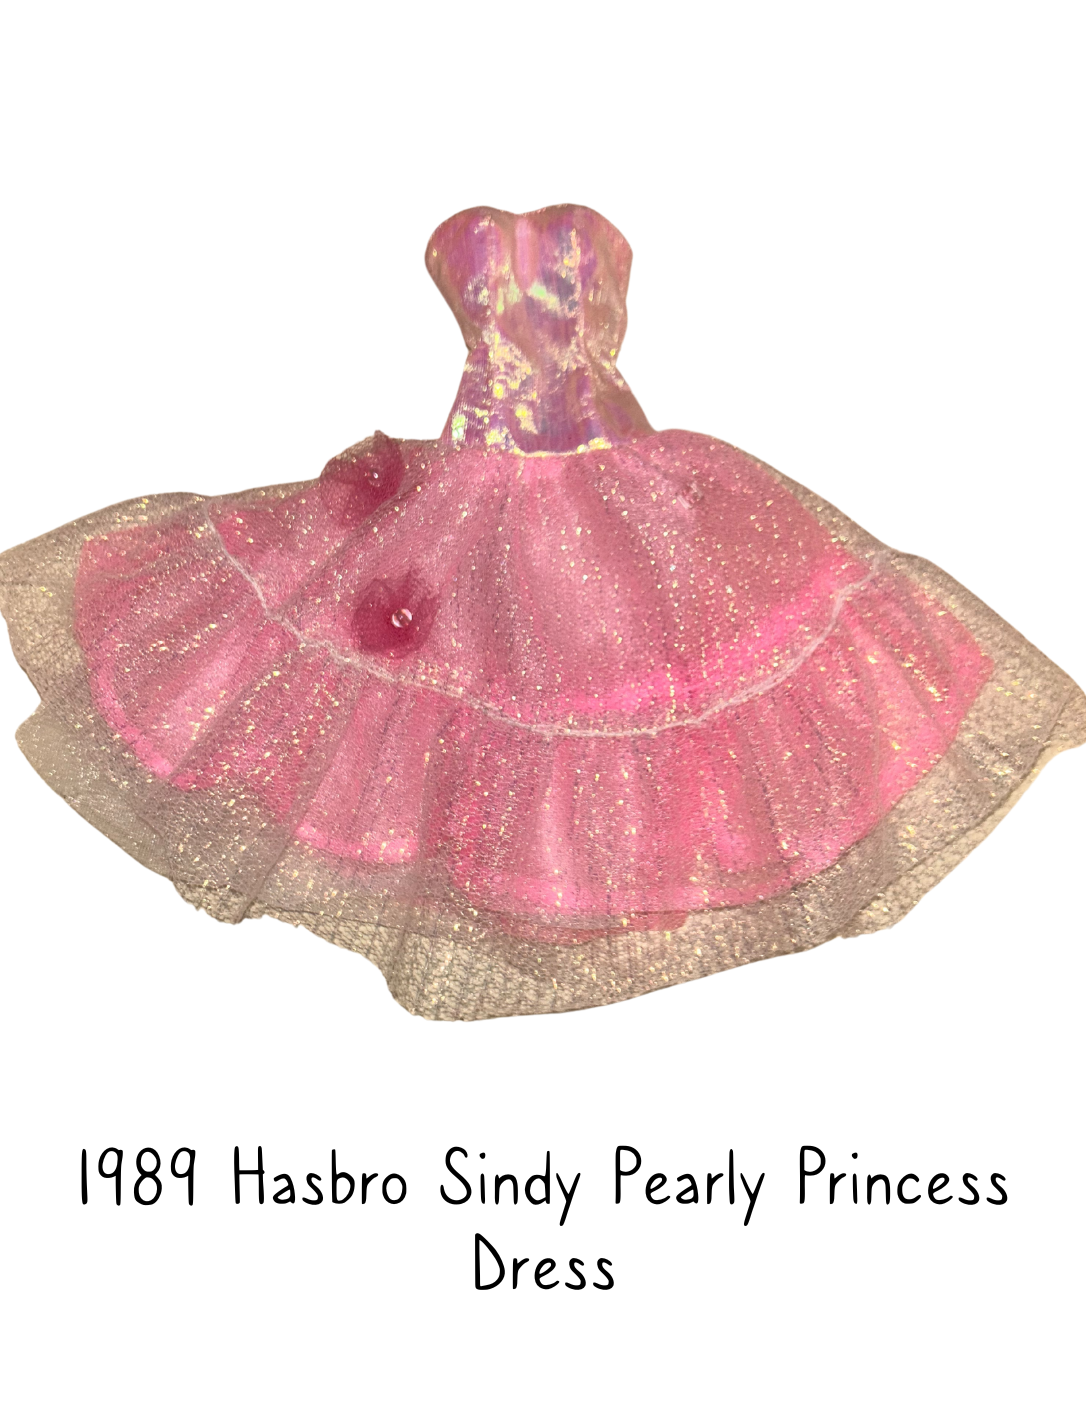 1989 Hasbro Sindy Pearly Princess Dress